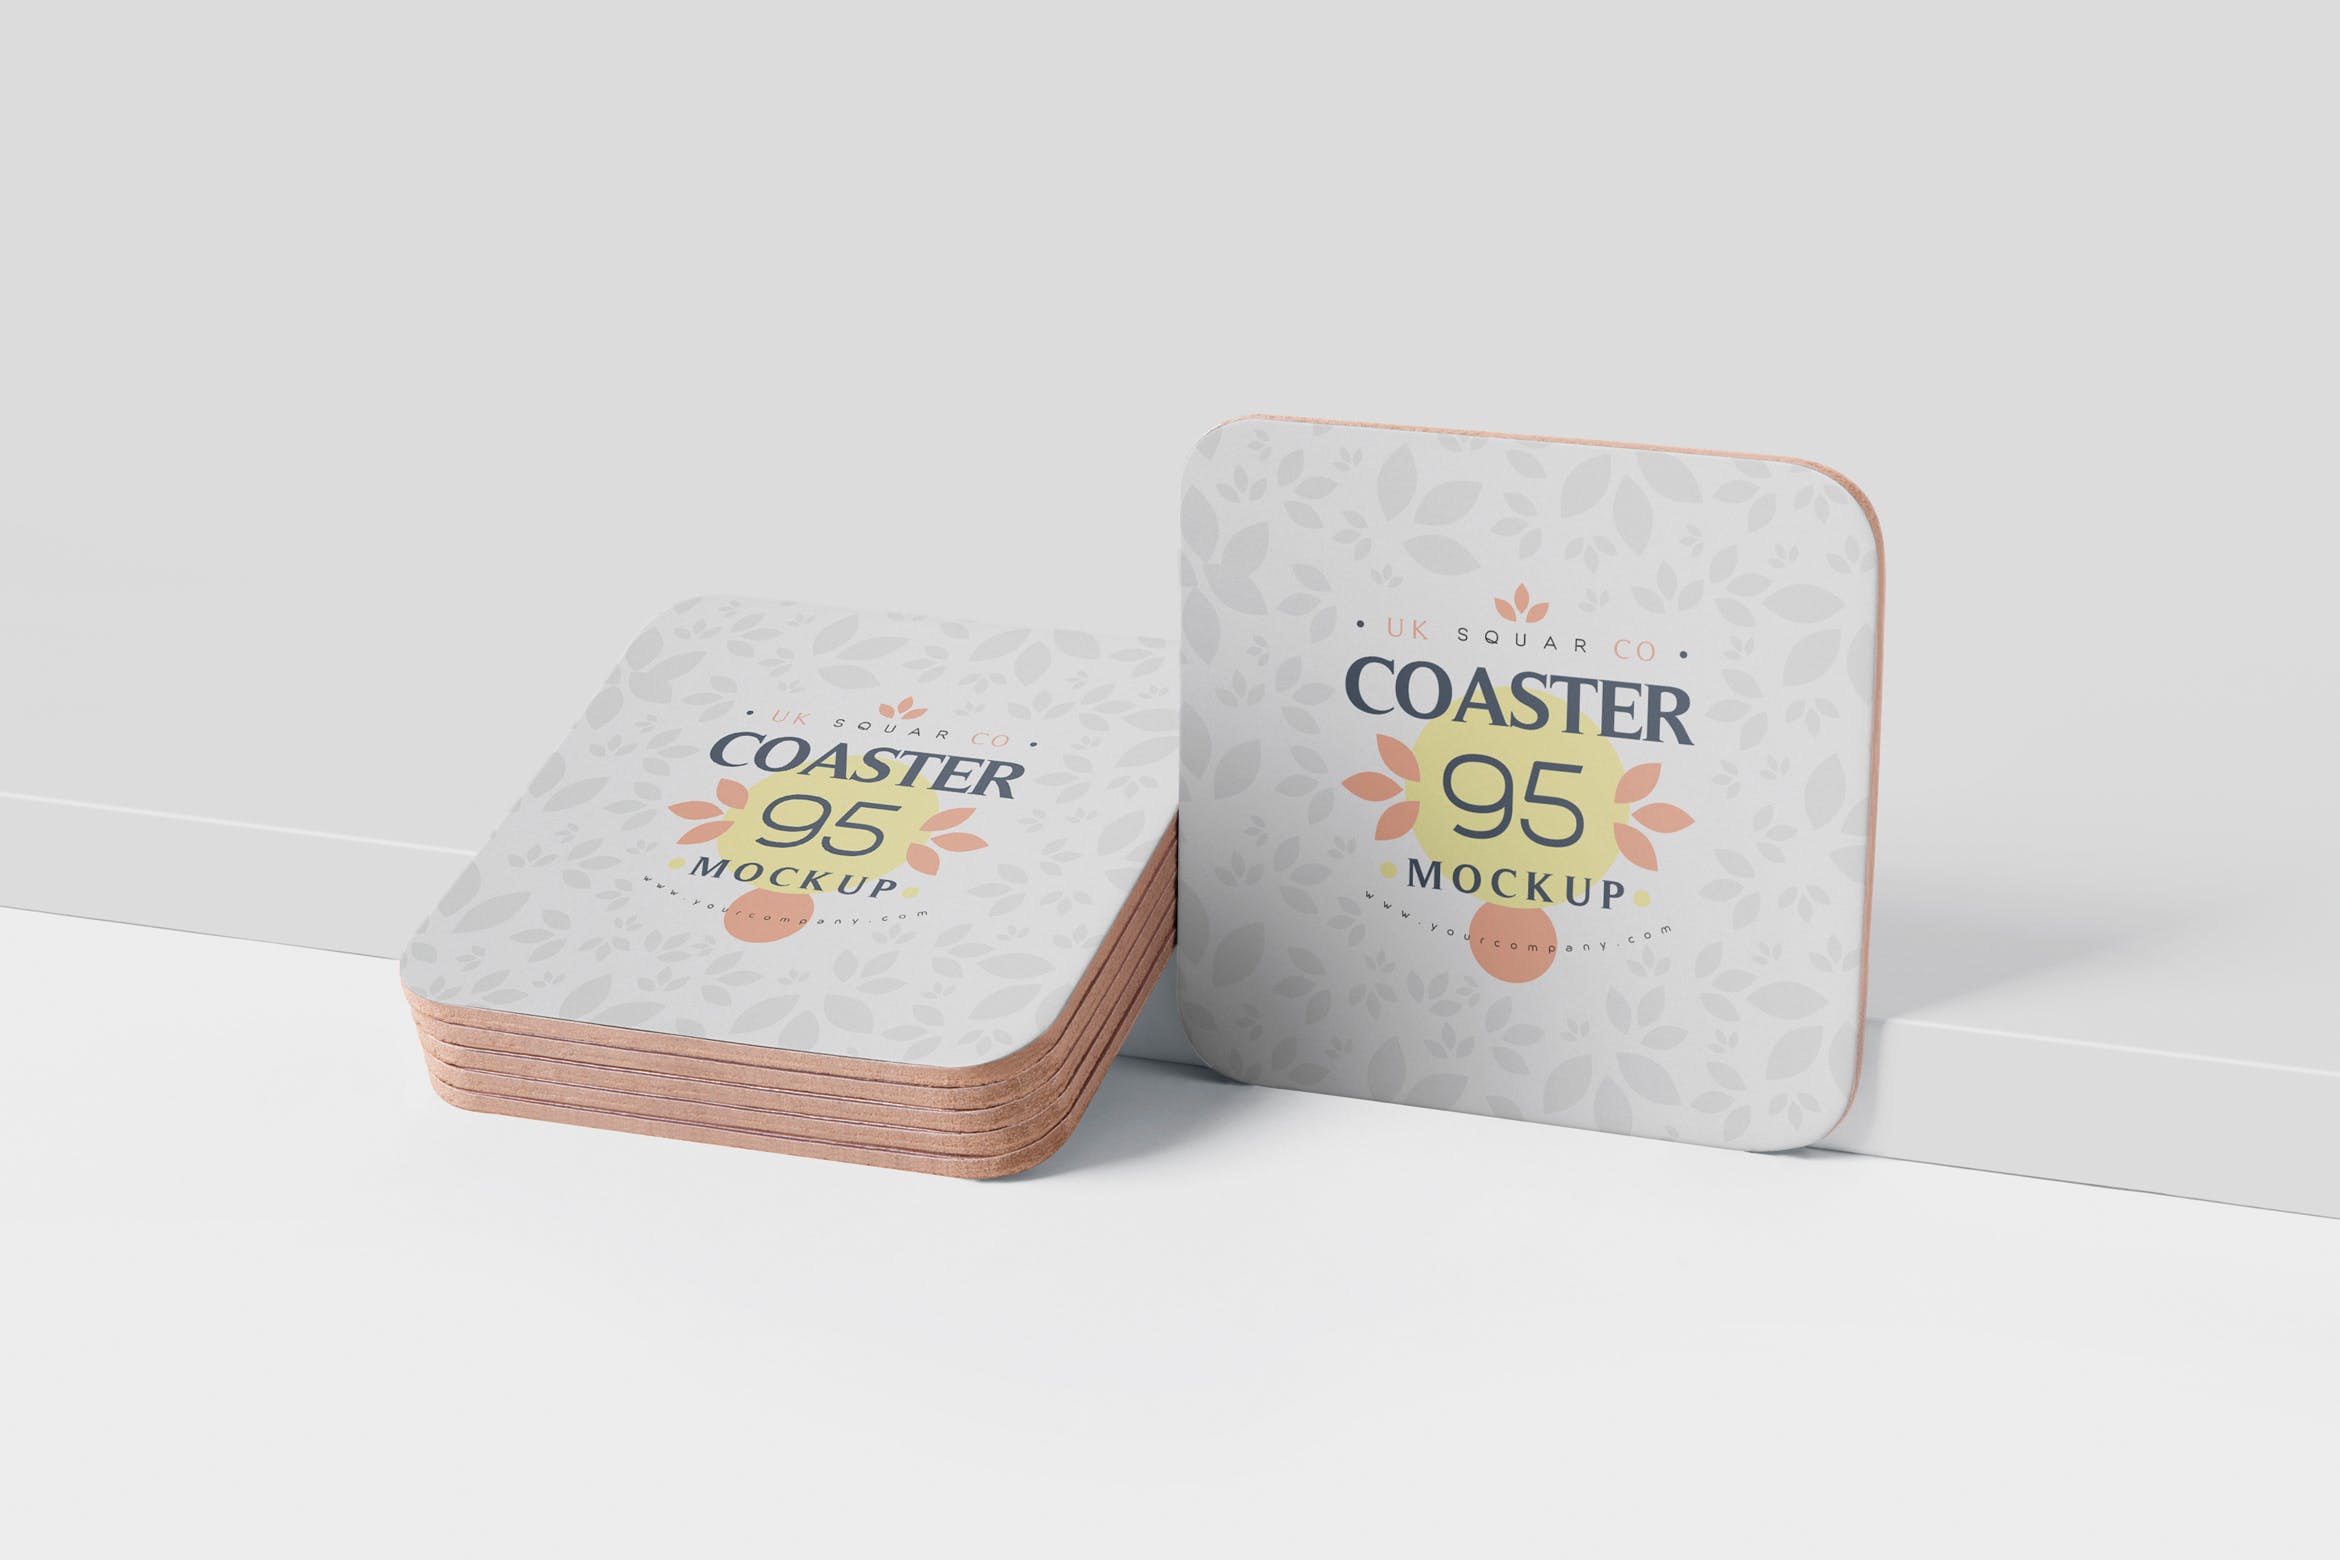 圆角方形杯垫图案设计16图库精选模板 Square Coaster Mock-Up with Round Corner插图